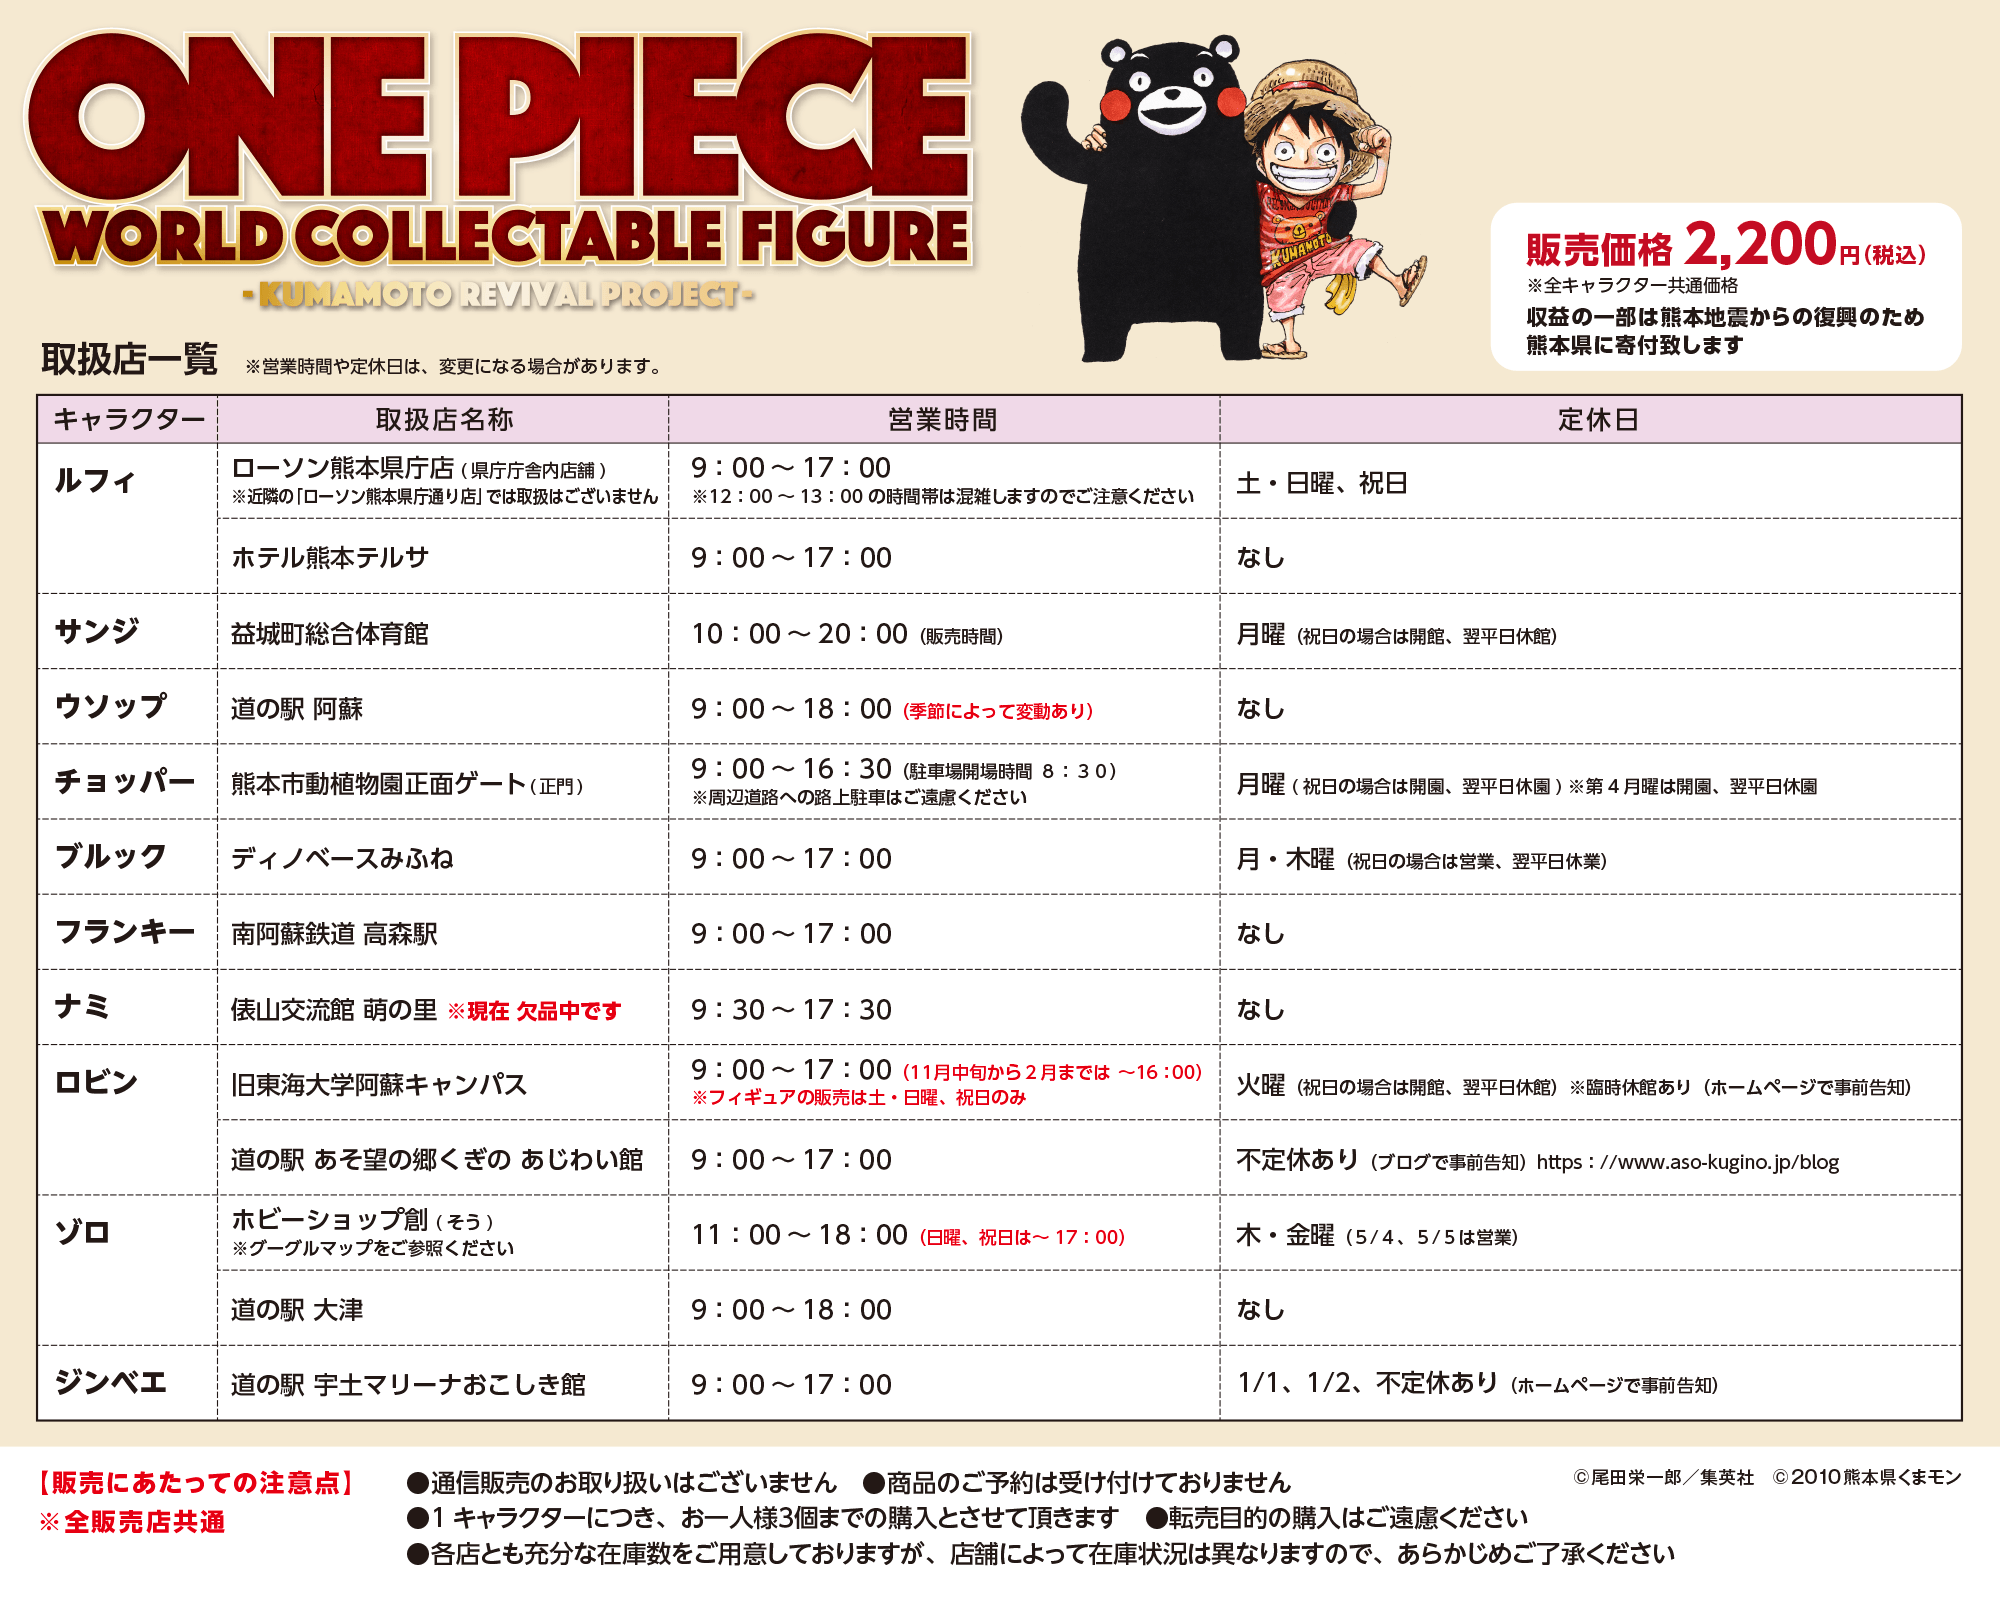 ONE PIECE熊本復興プロジェクト【公式】 (@op_kfpj) / Twitter